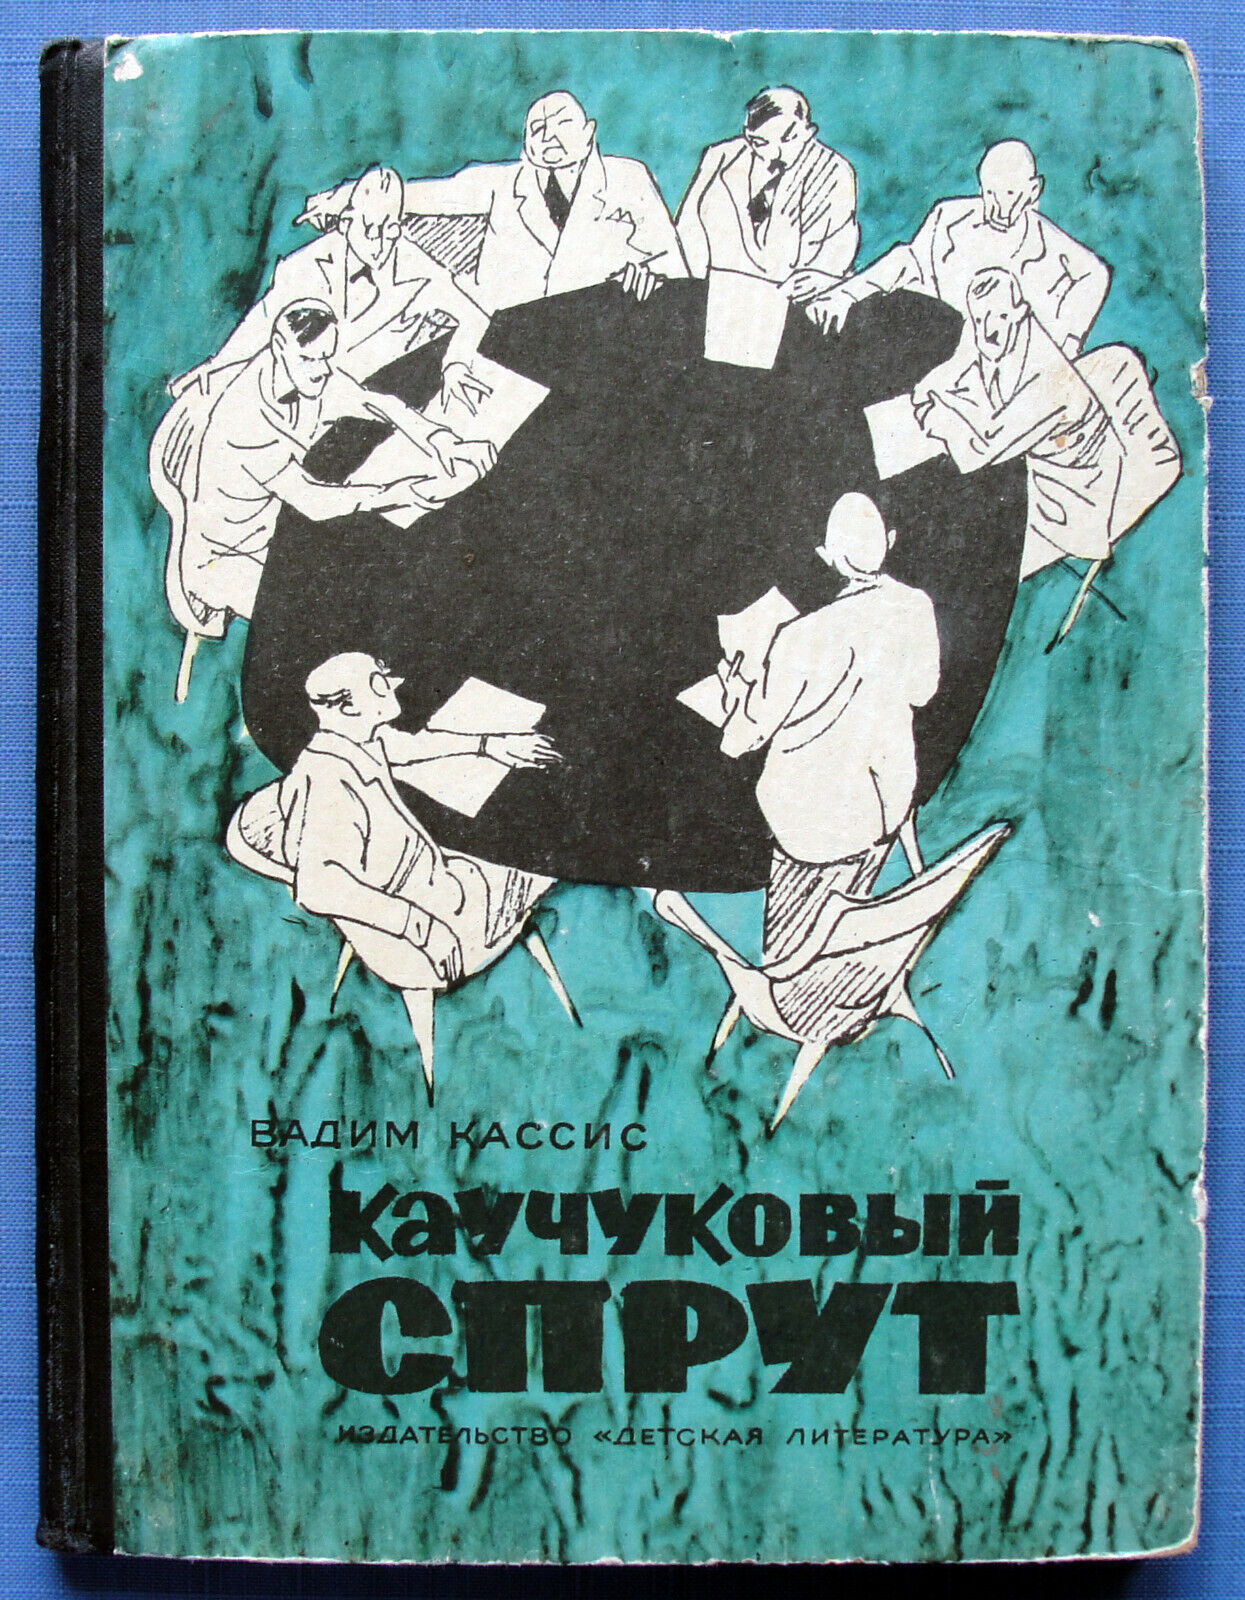 1967 Каучуковый спрут Cassis Drawings Goryaeva Russian USSR Soviet Vintage Book 